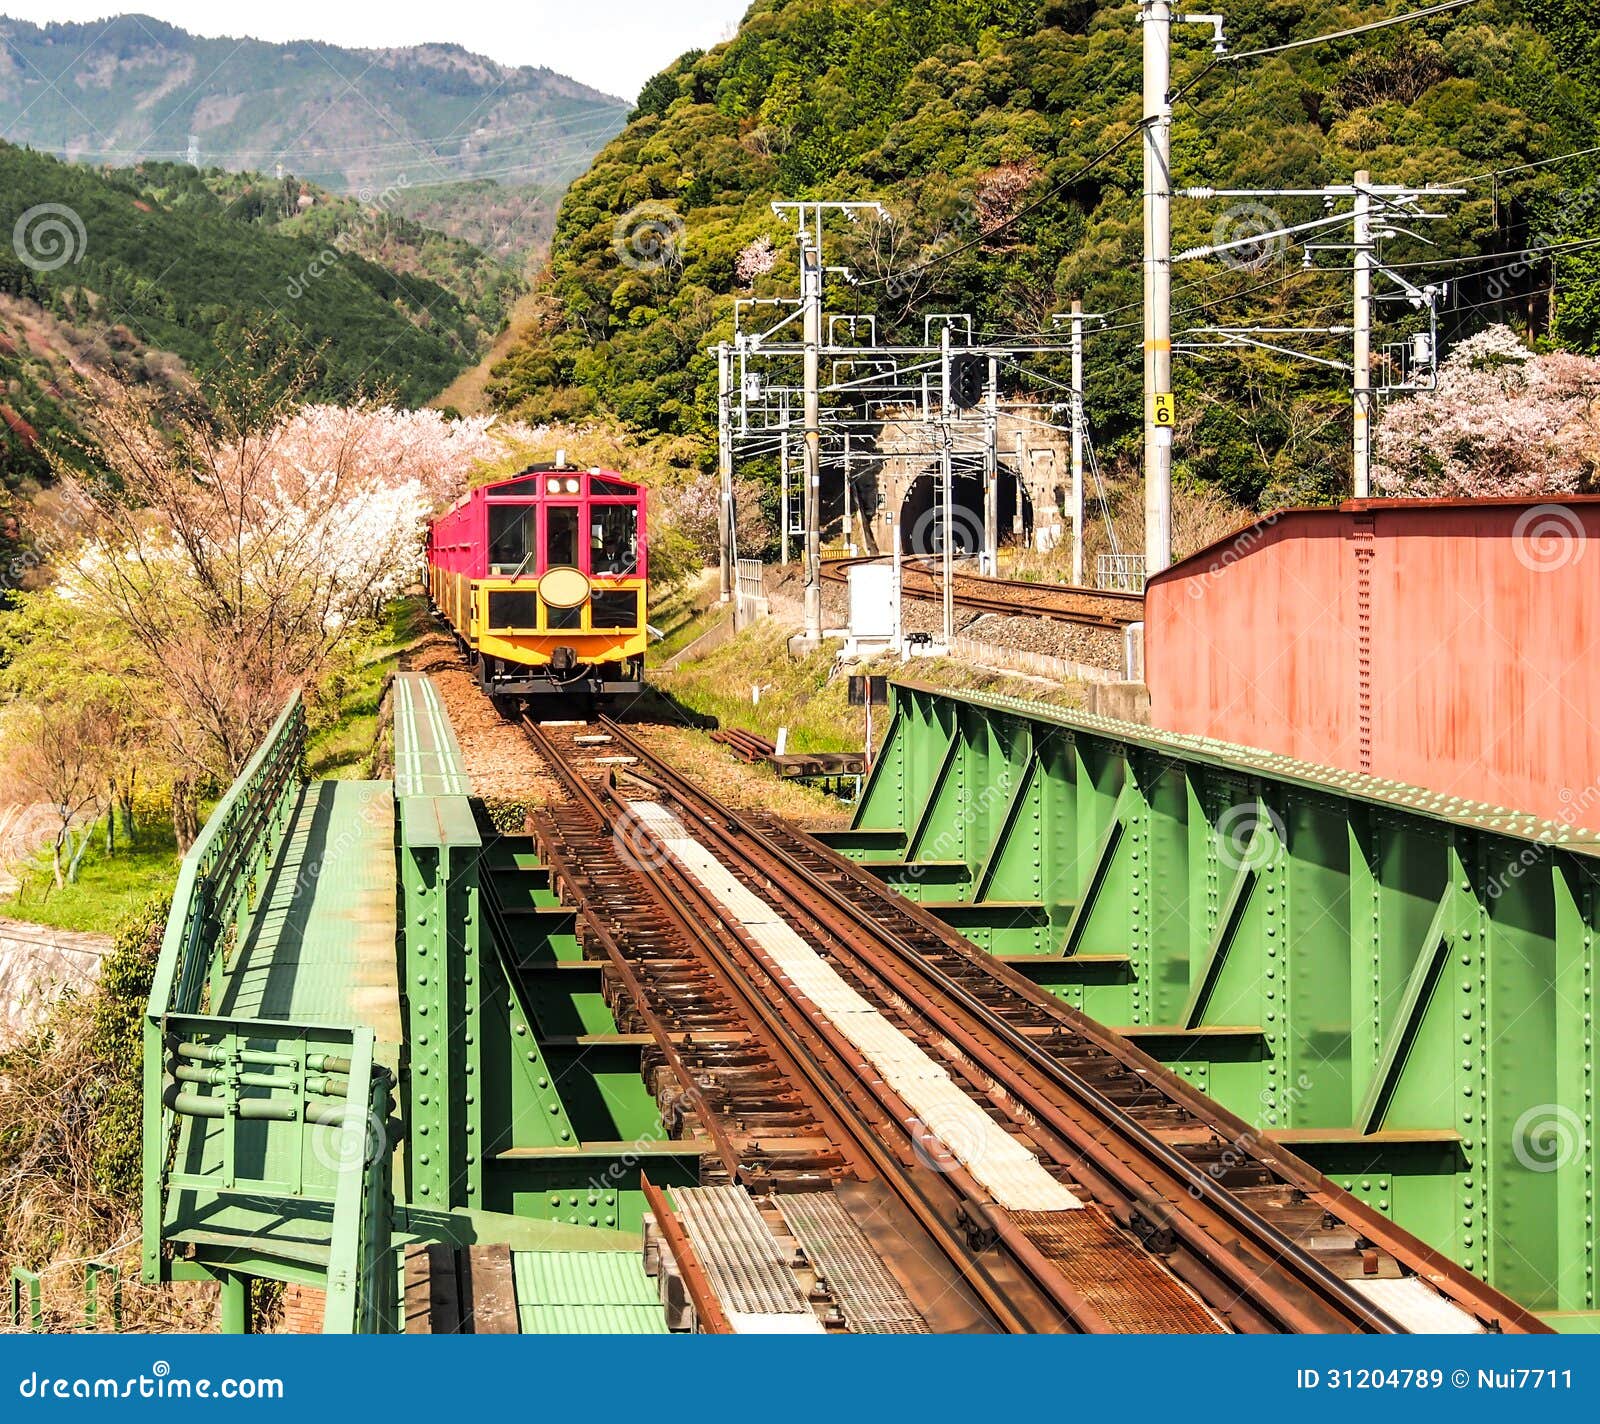 Japan scenic train, Kyoto, Japan 1. Japan scenic train with sakura blossom at Arashiyama, Kyoto, Japan